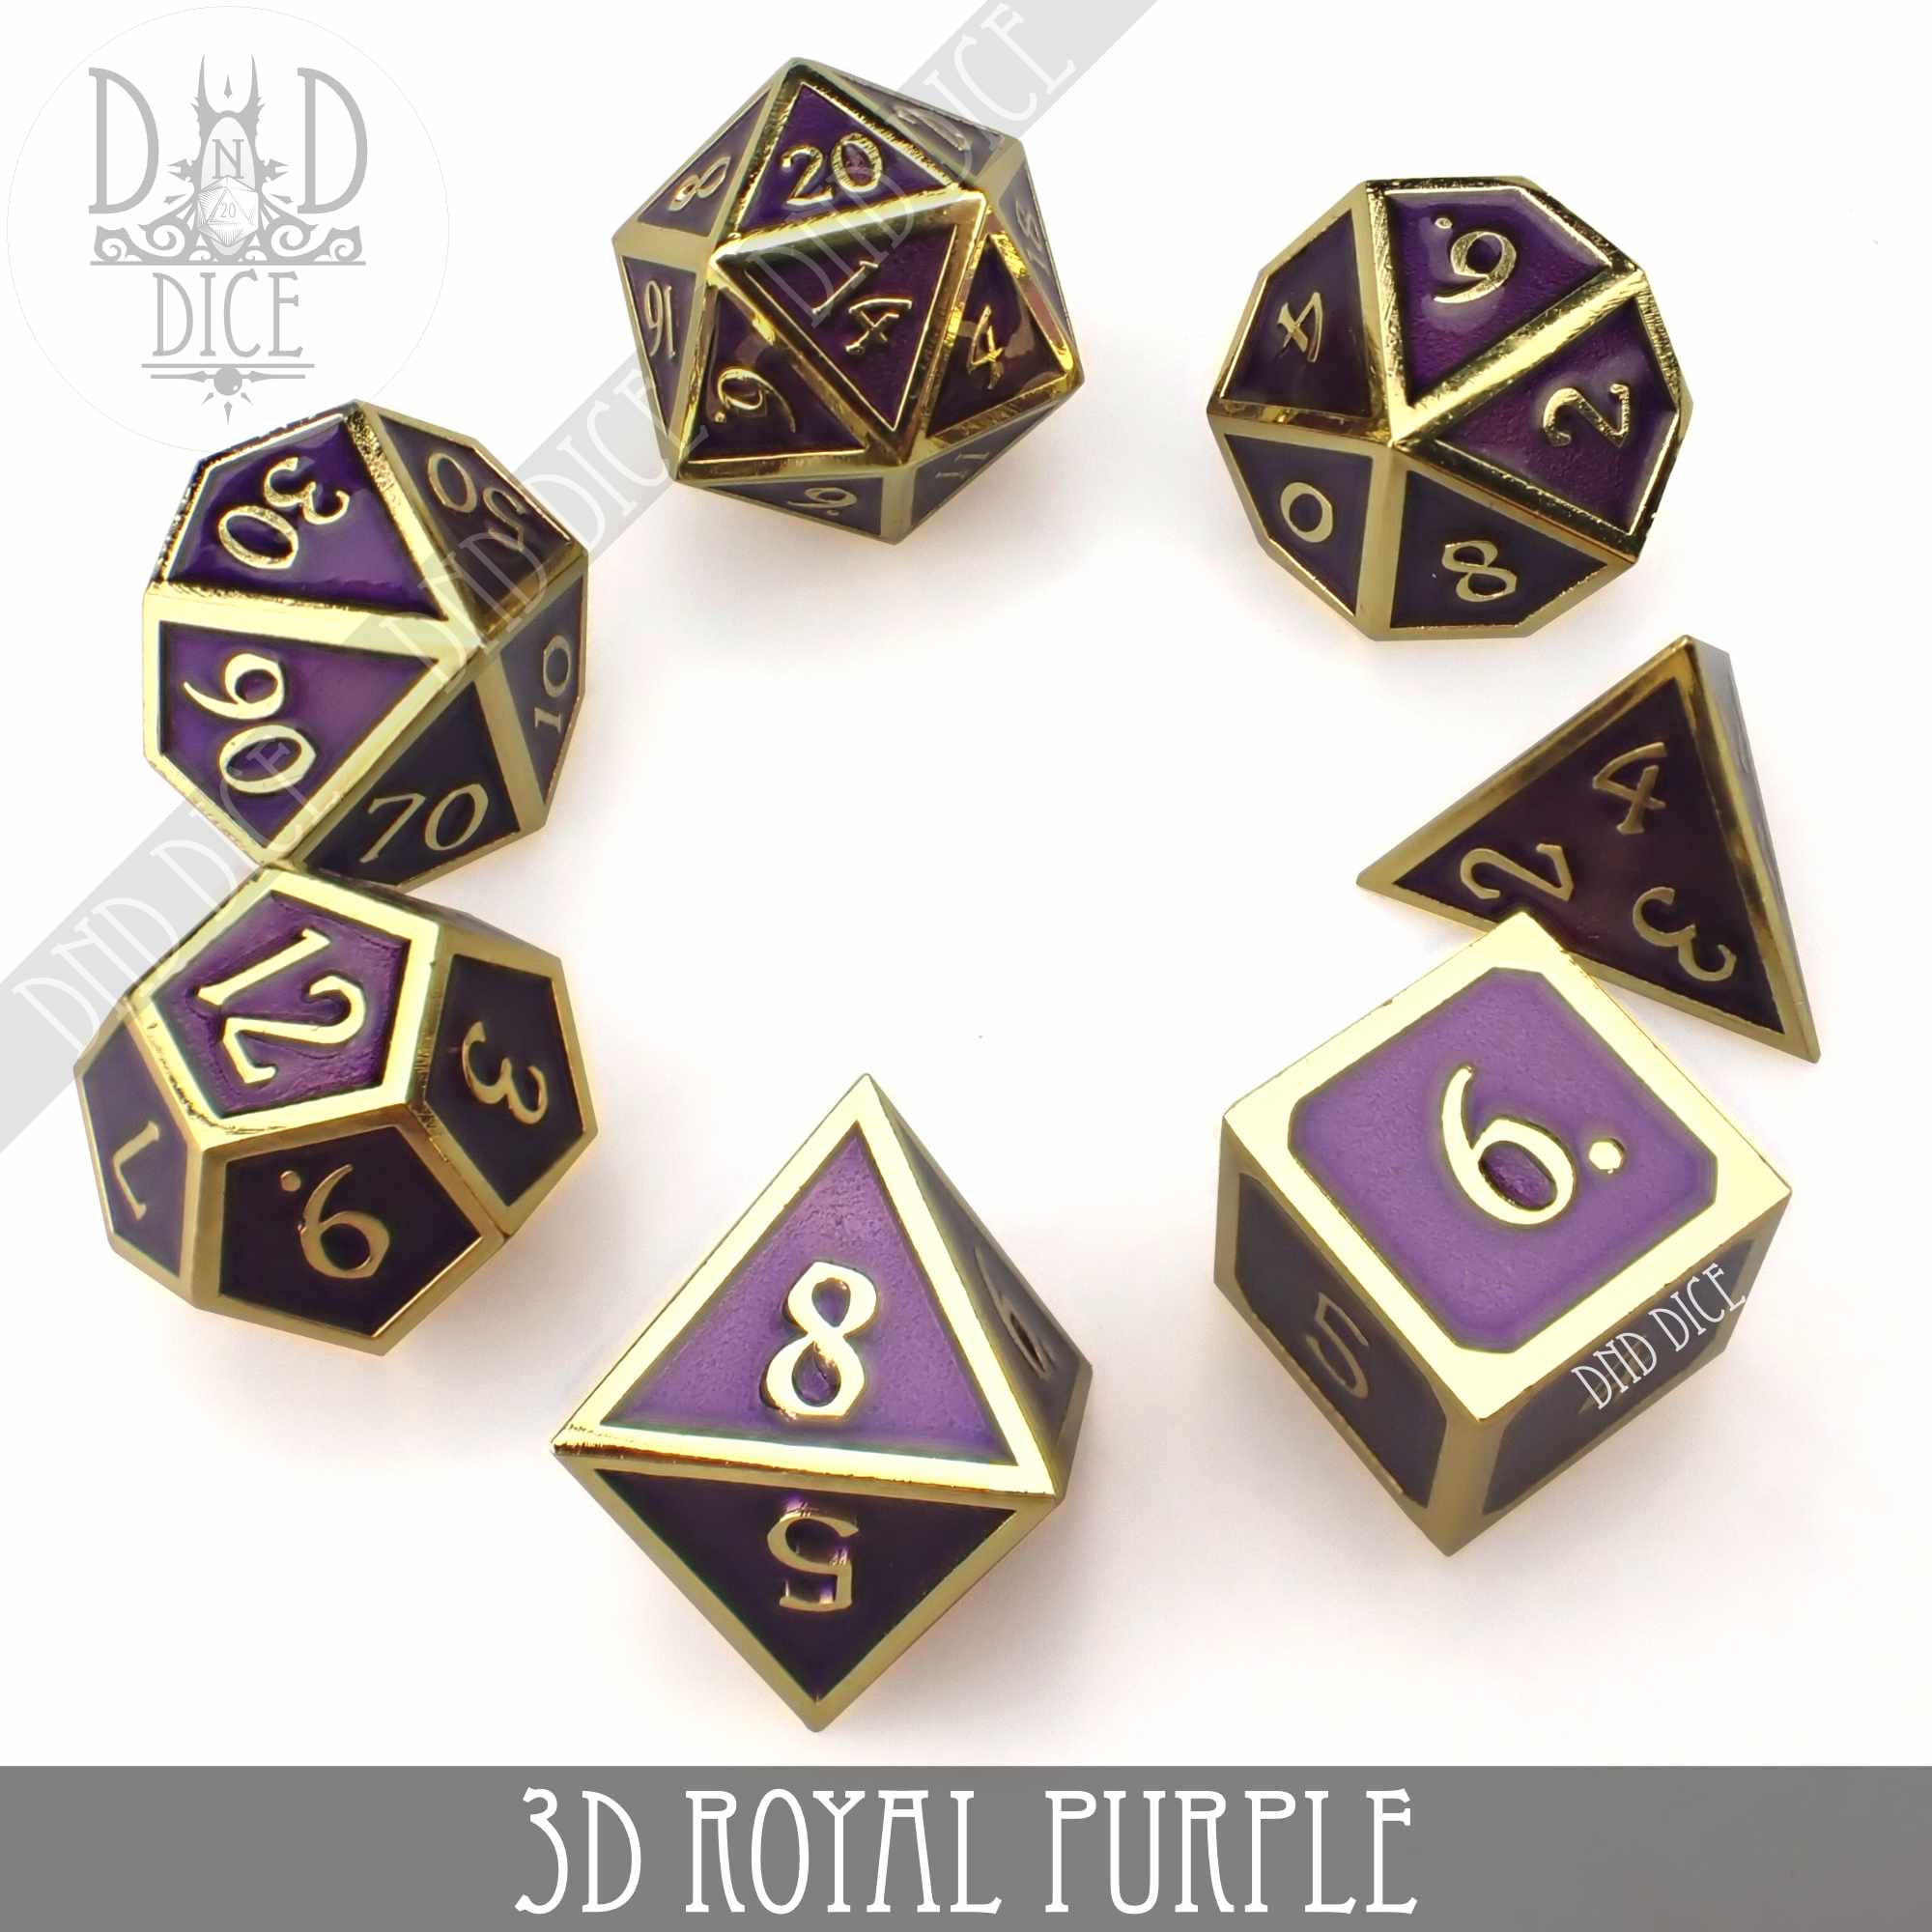 3D Royal Purple Metal Dice Set